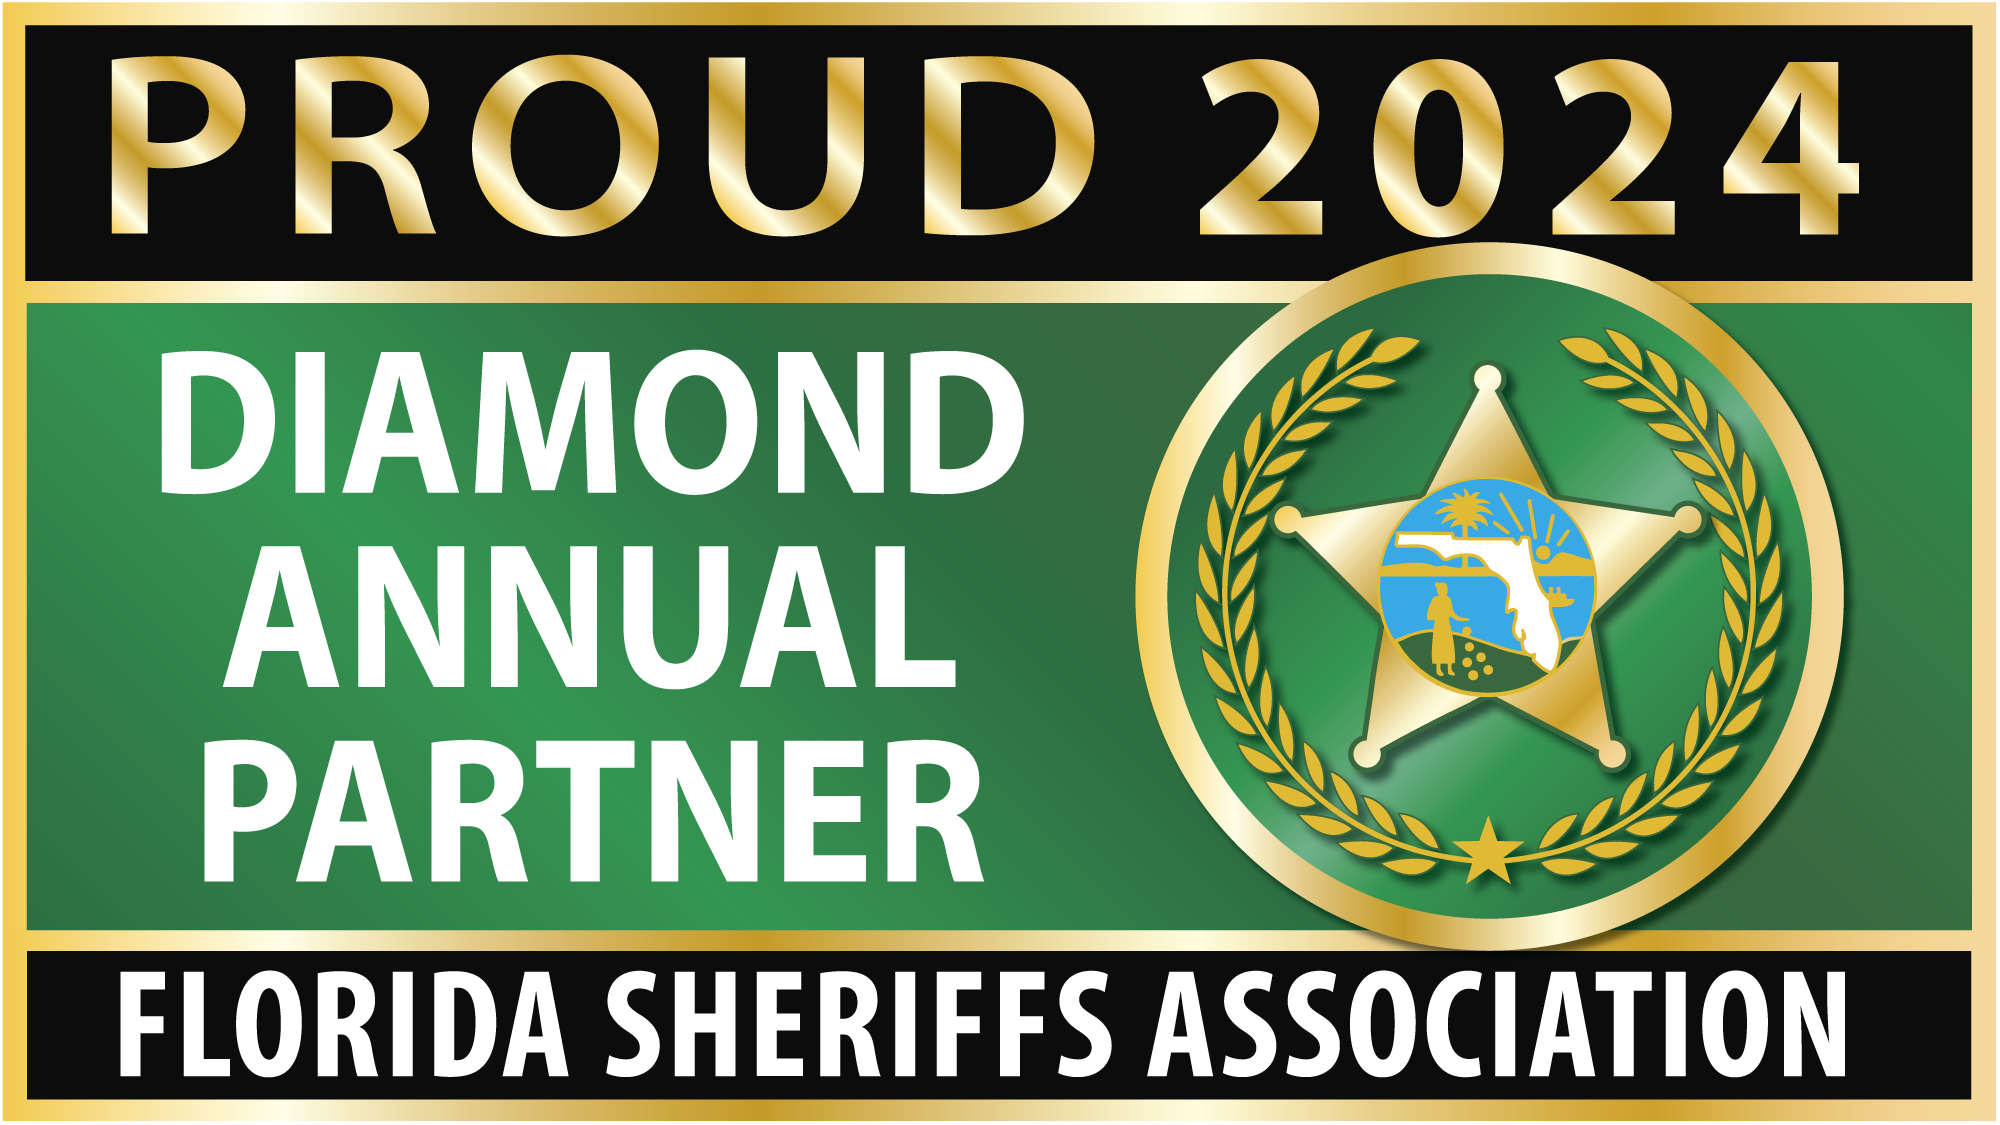 Florida Sheriffs Association Diamond Annual Partner